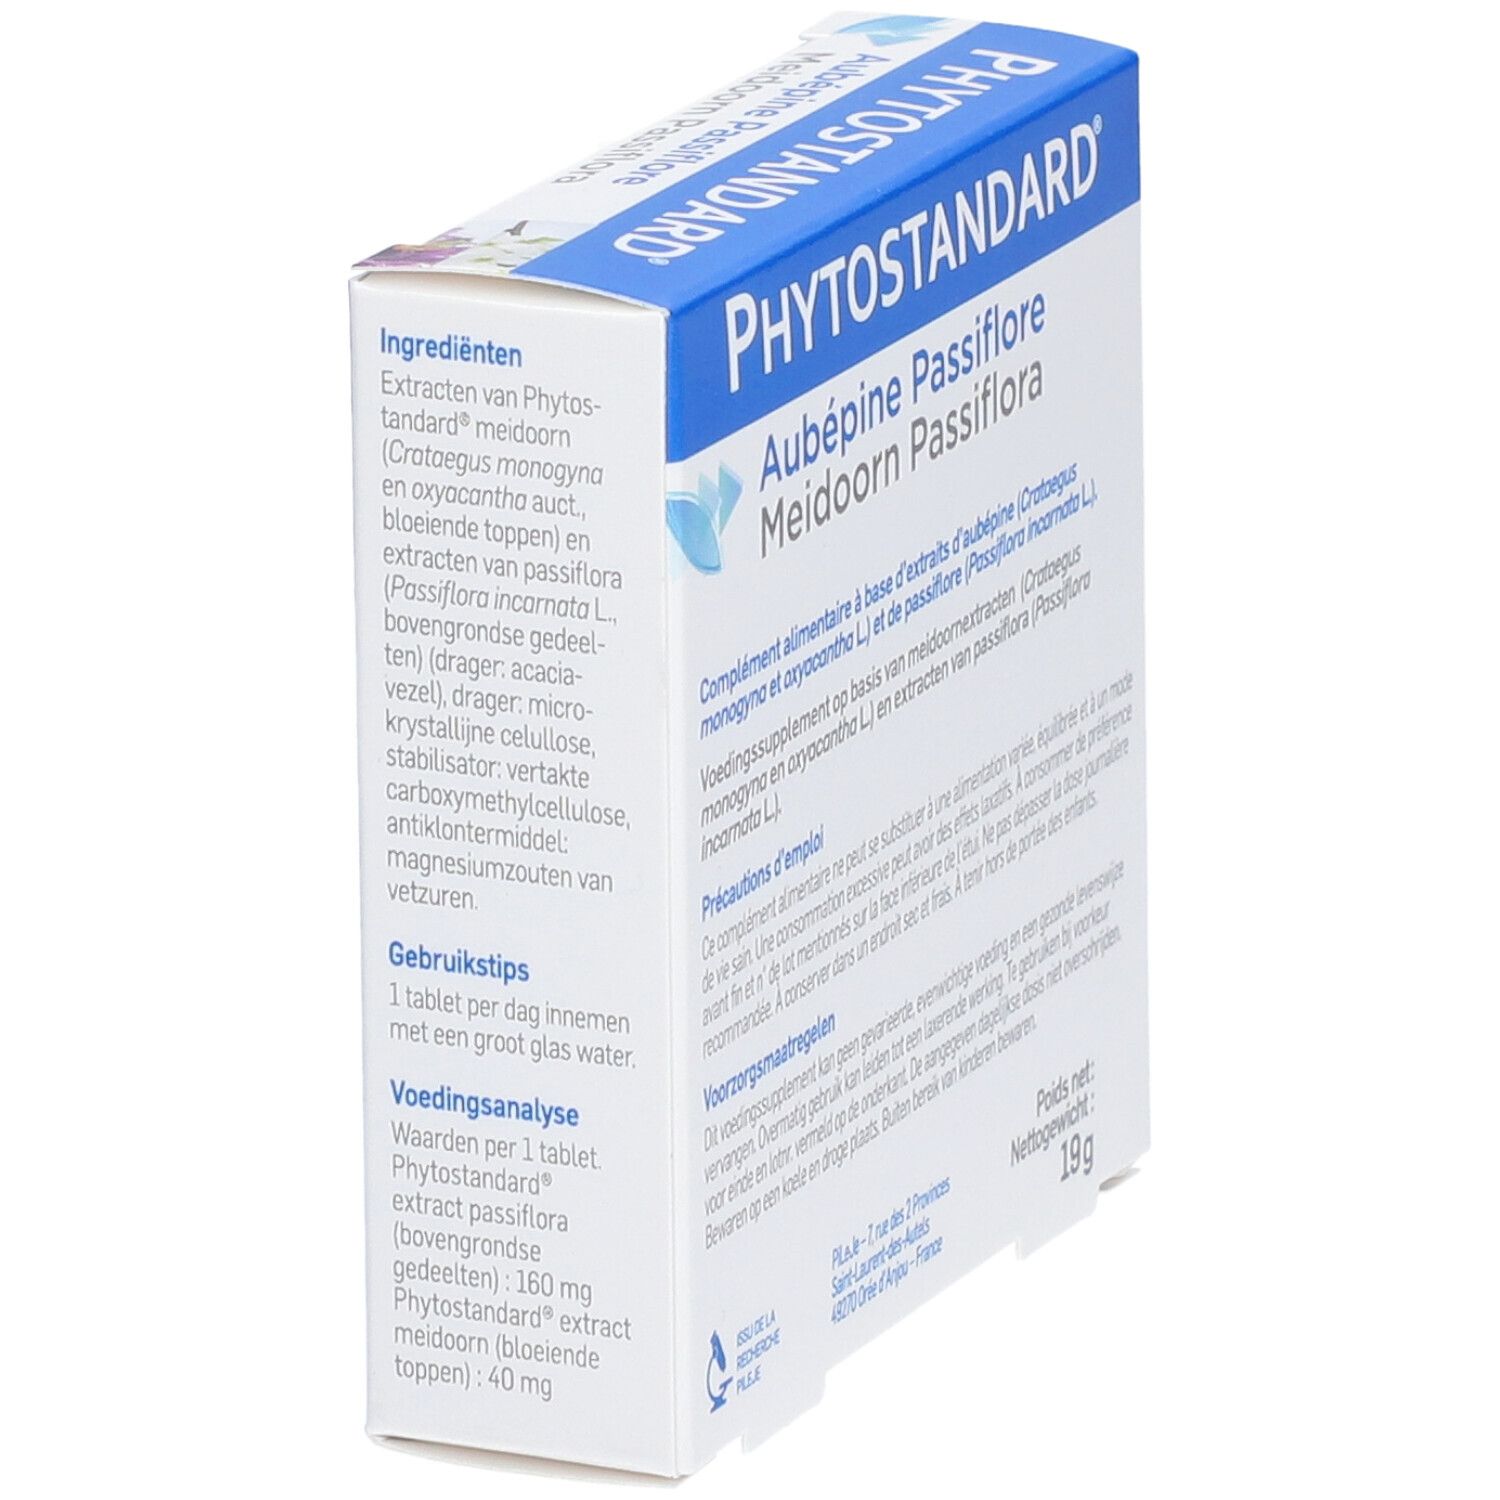 Phytostandard® Aubepine - Passiflore